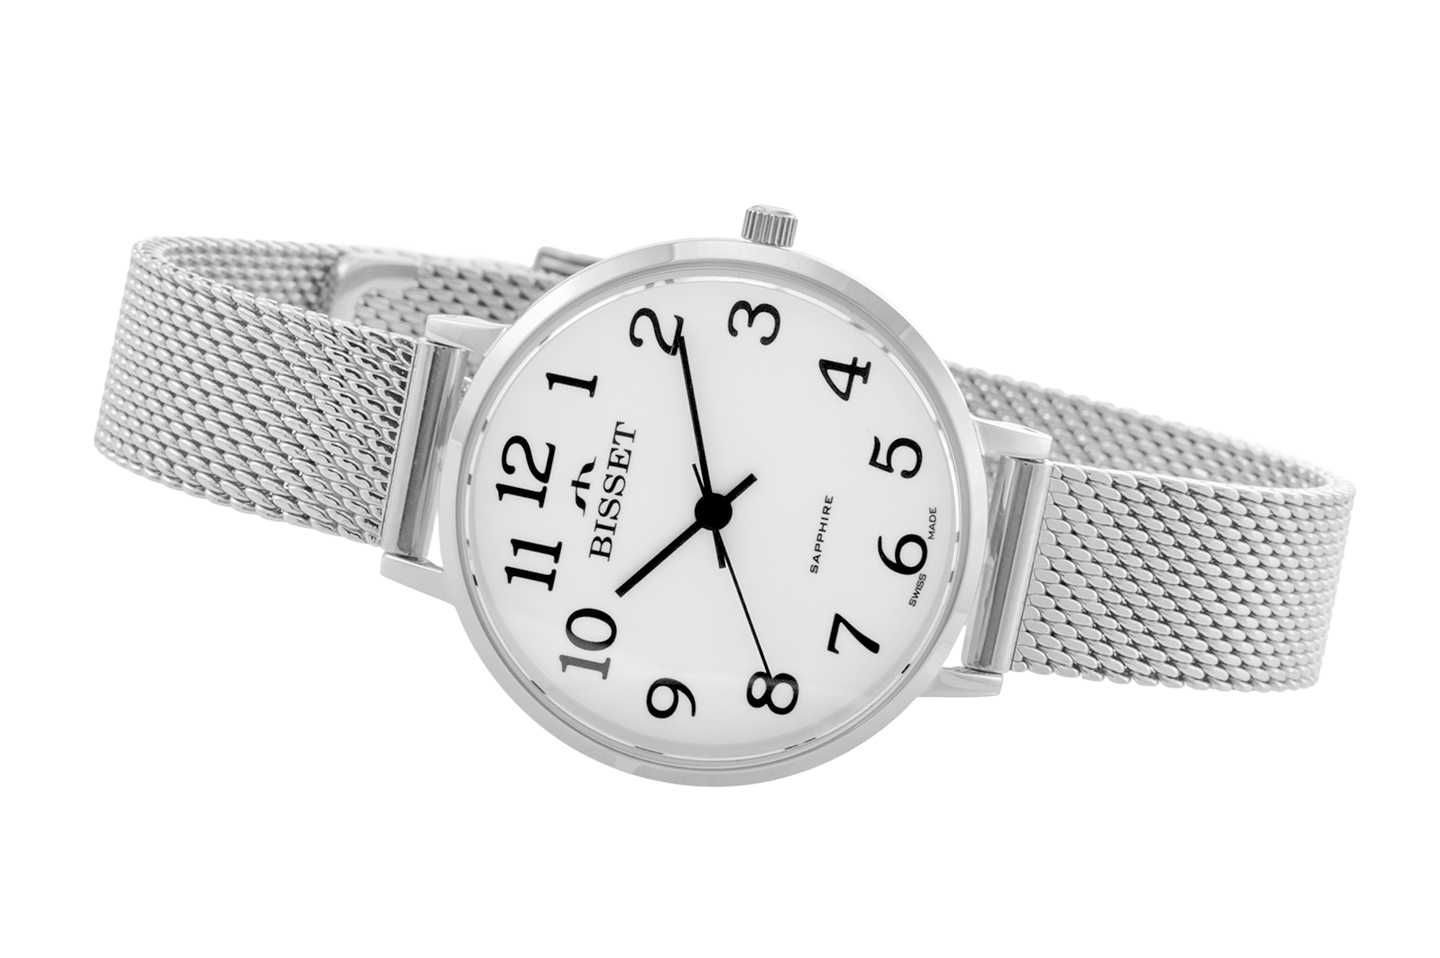 NOWY: Zegarek Bisset damski BSBF30 srebrny/biała porcelana